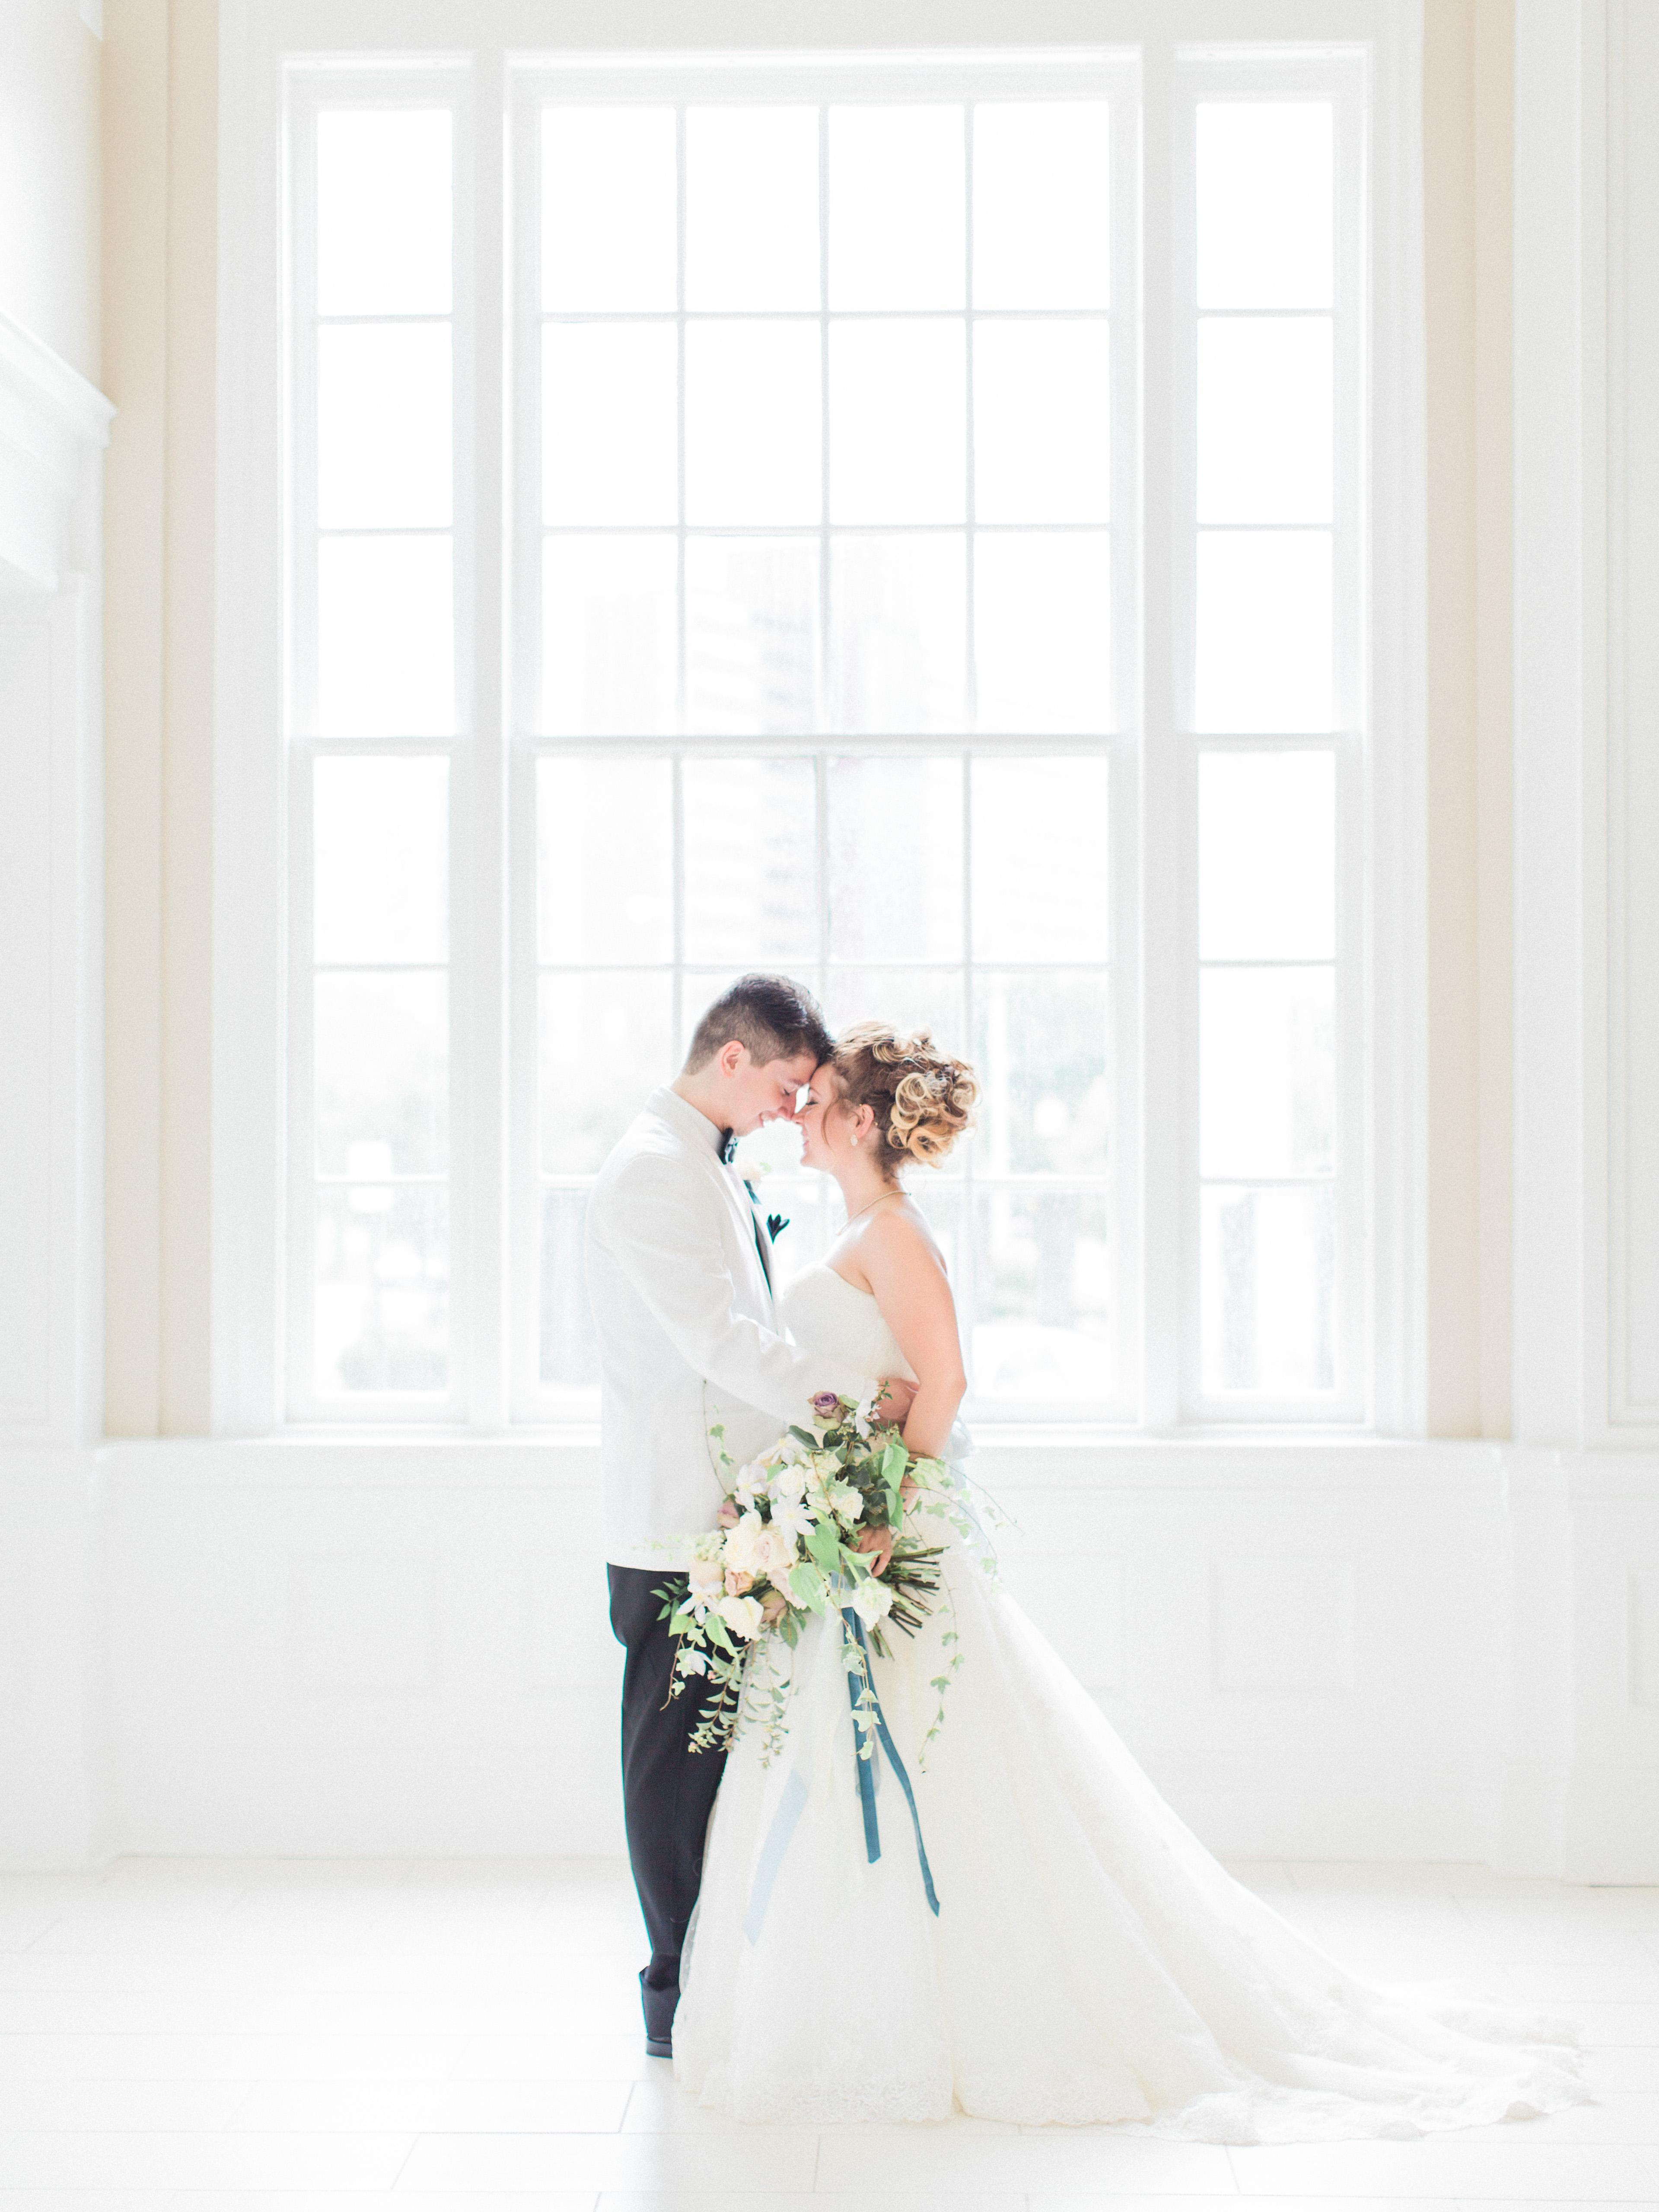 Dusty Blue Ballroom Wedding | The Day's Design | Samantha James Photography